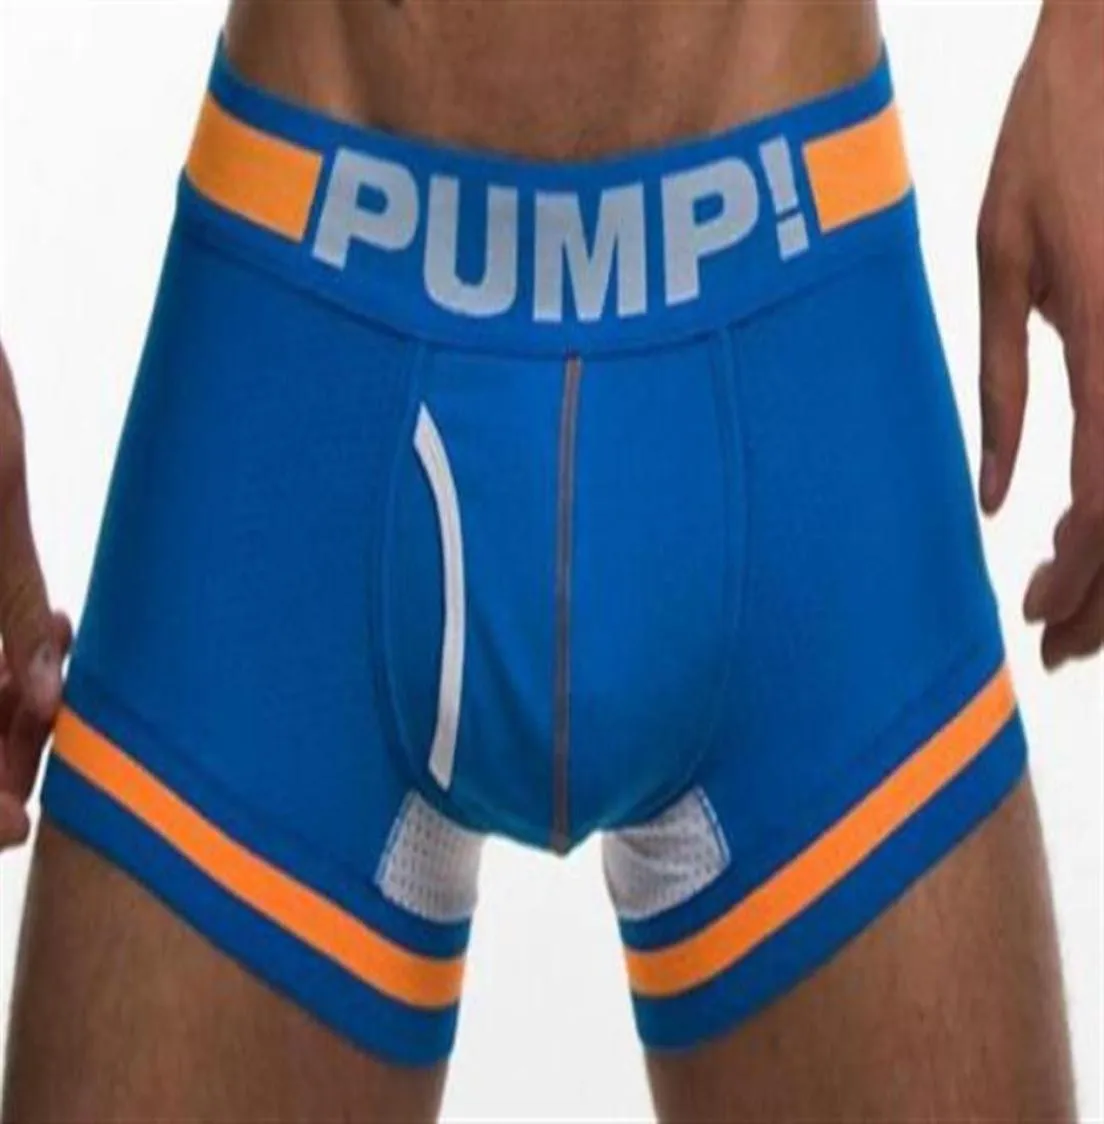 New cotton PUMP men039s underwear new products Breathable mesh cloth sexy men039s boxer briefs 3piece lot27597808540